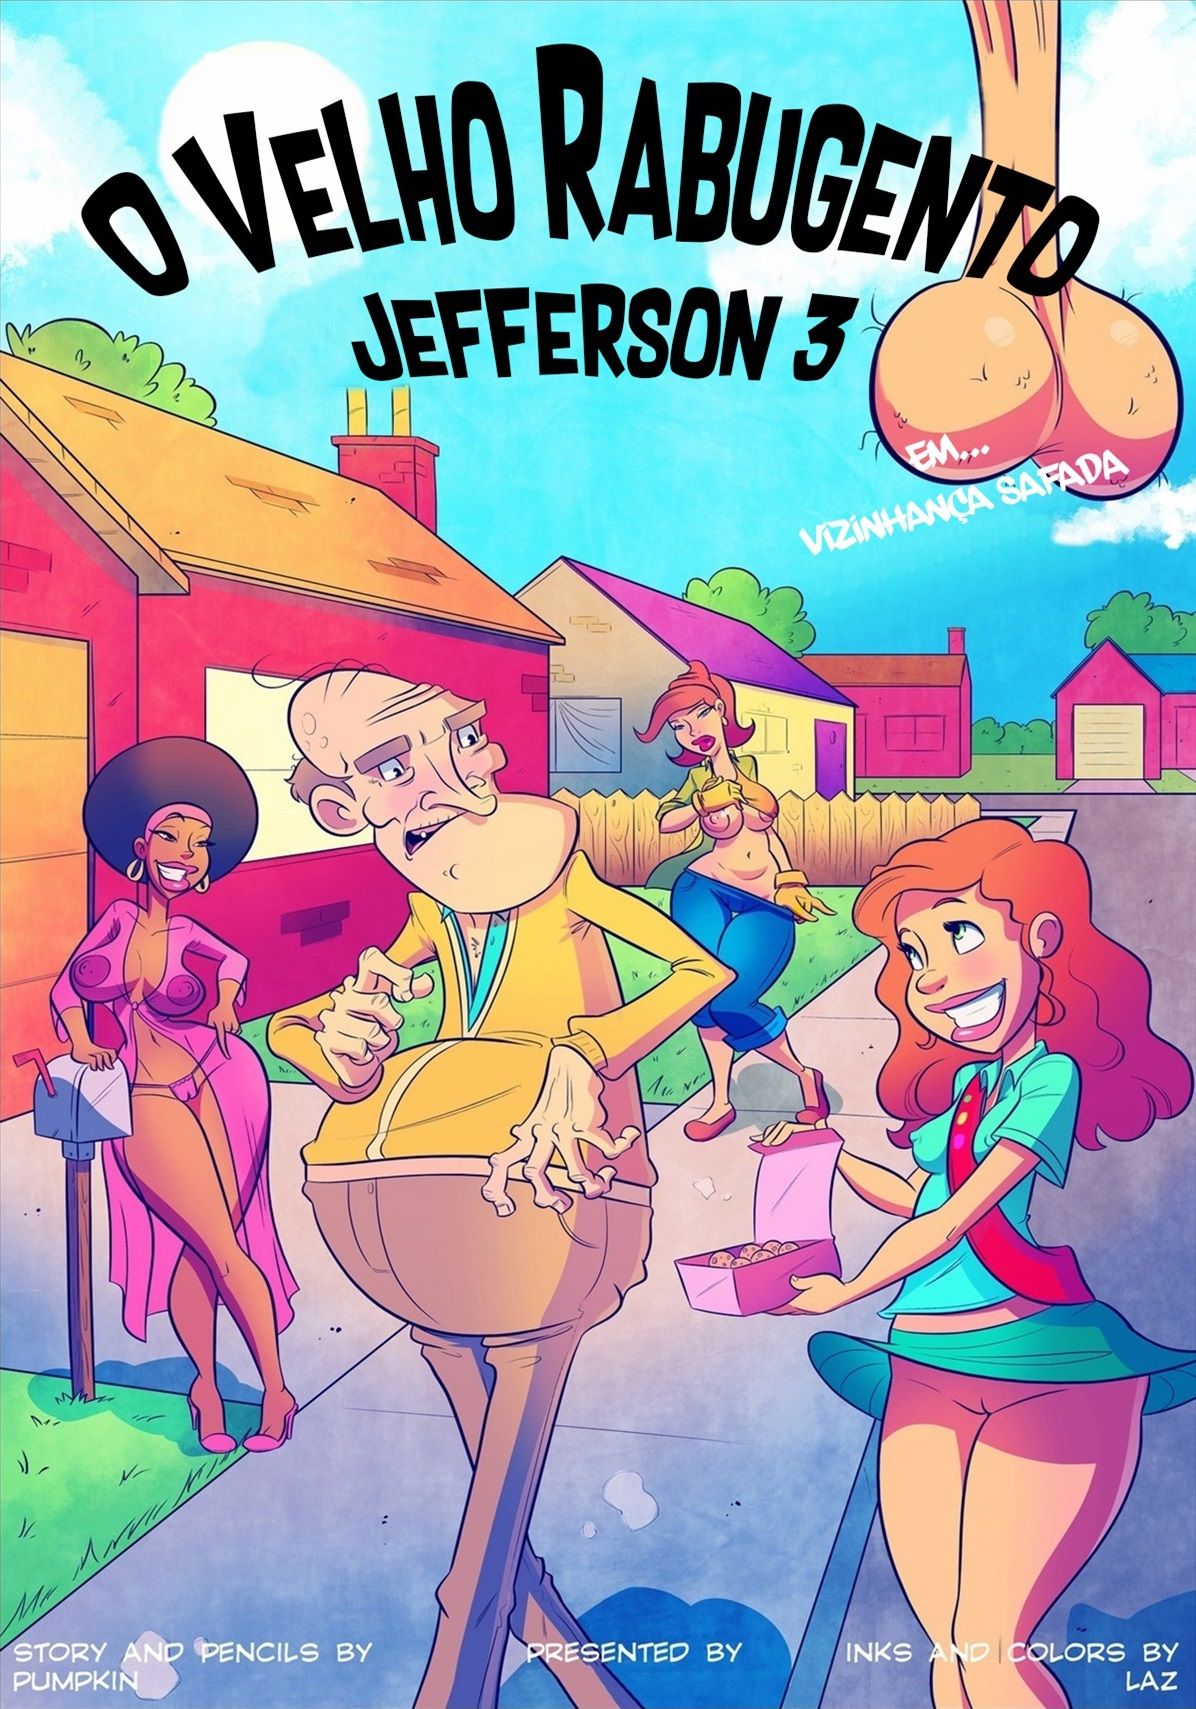 O Velho Rabugento Jefferson 3